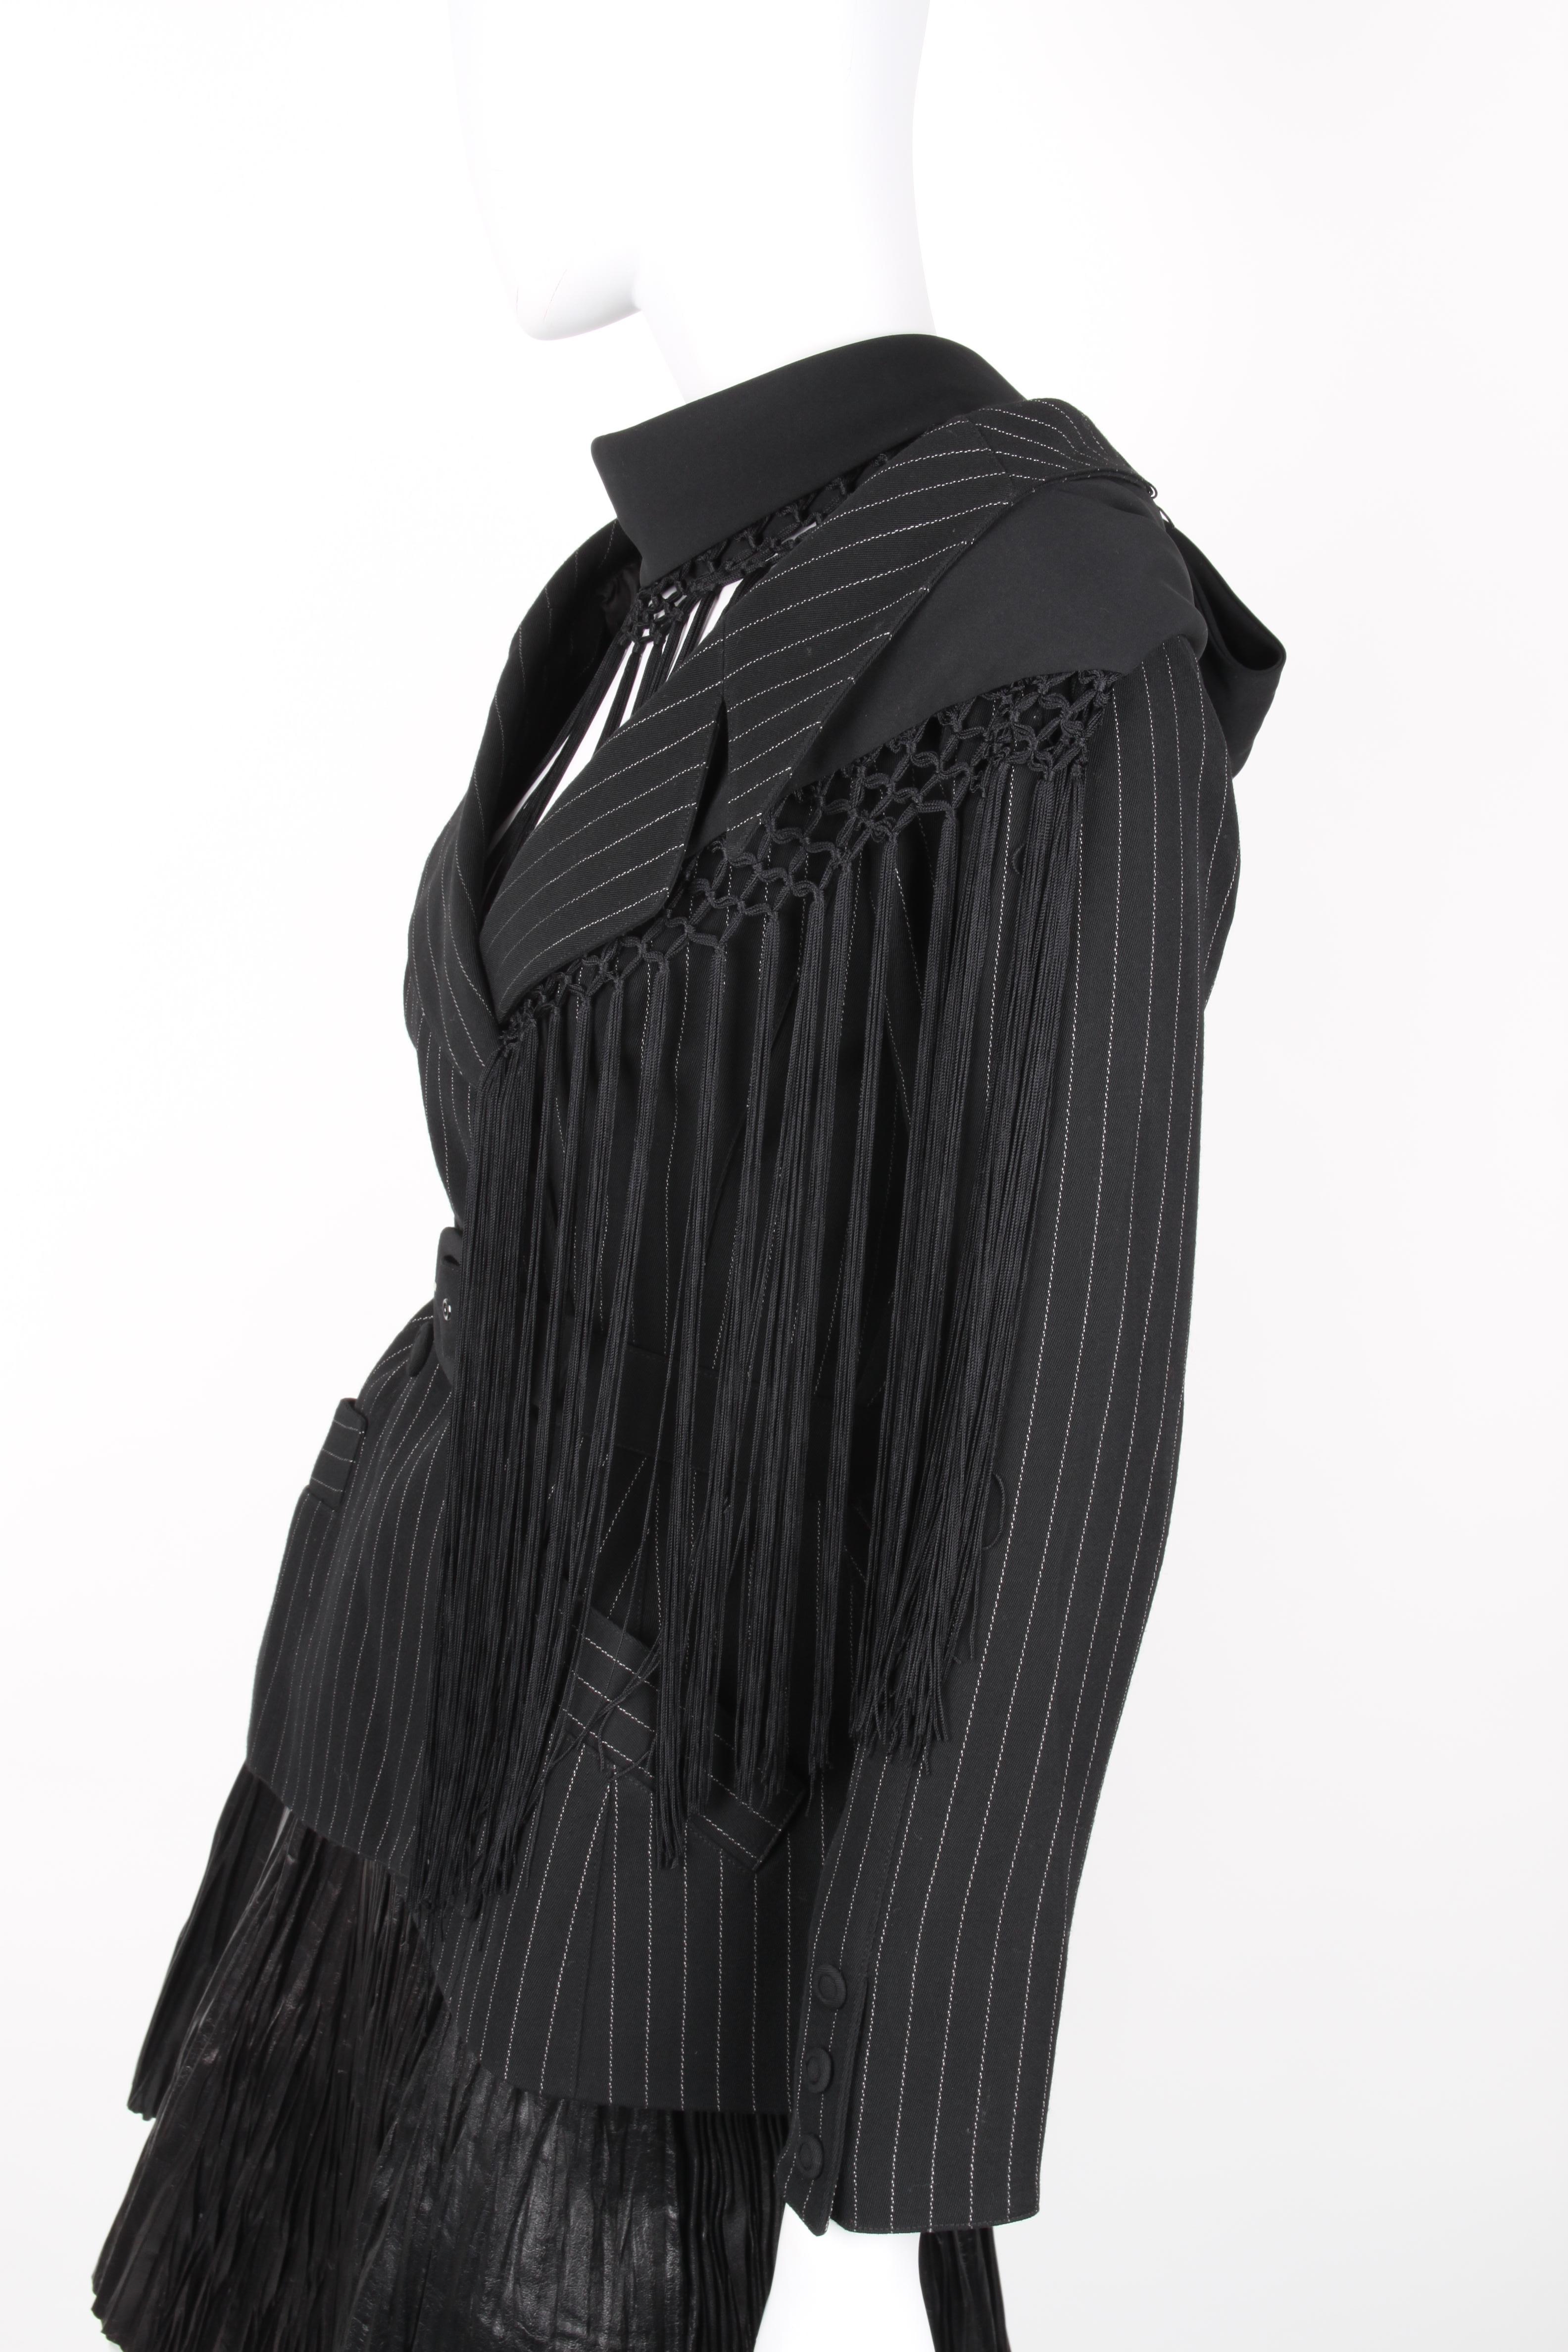 Women's or Men's Thierry Mugler pinstripe jacket with asymmetric silk tassle shawl For Sale